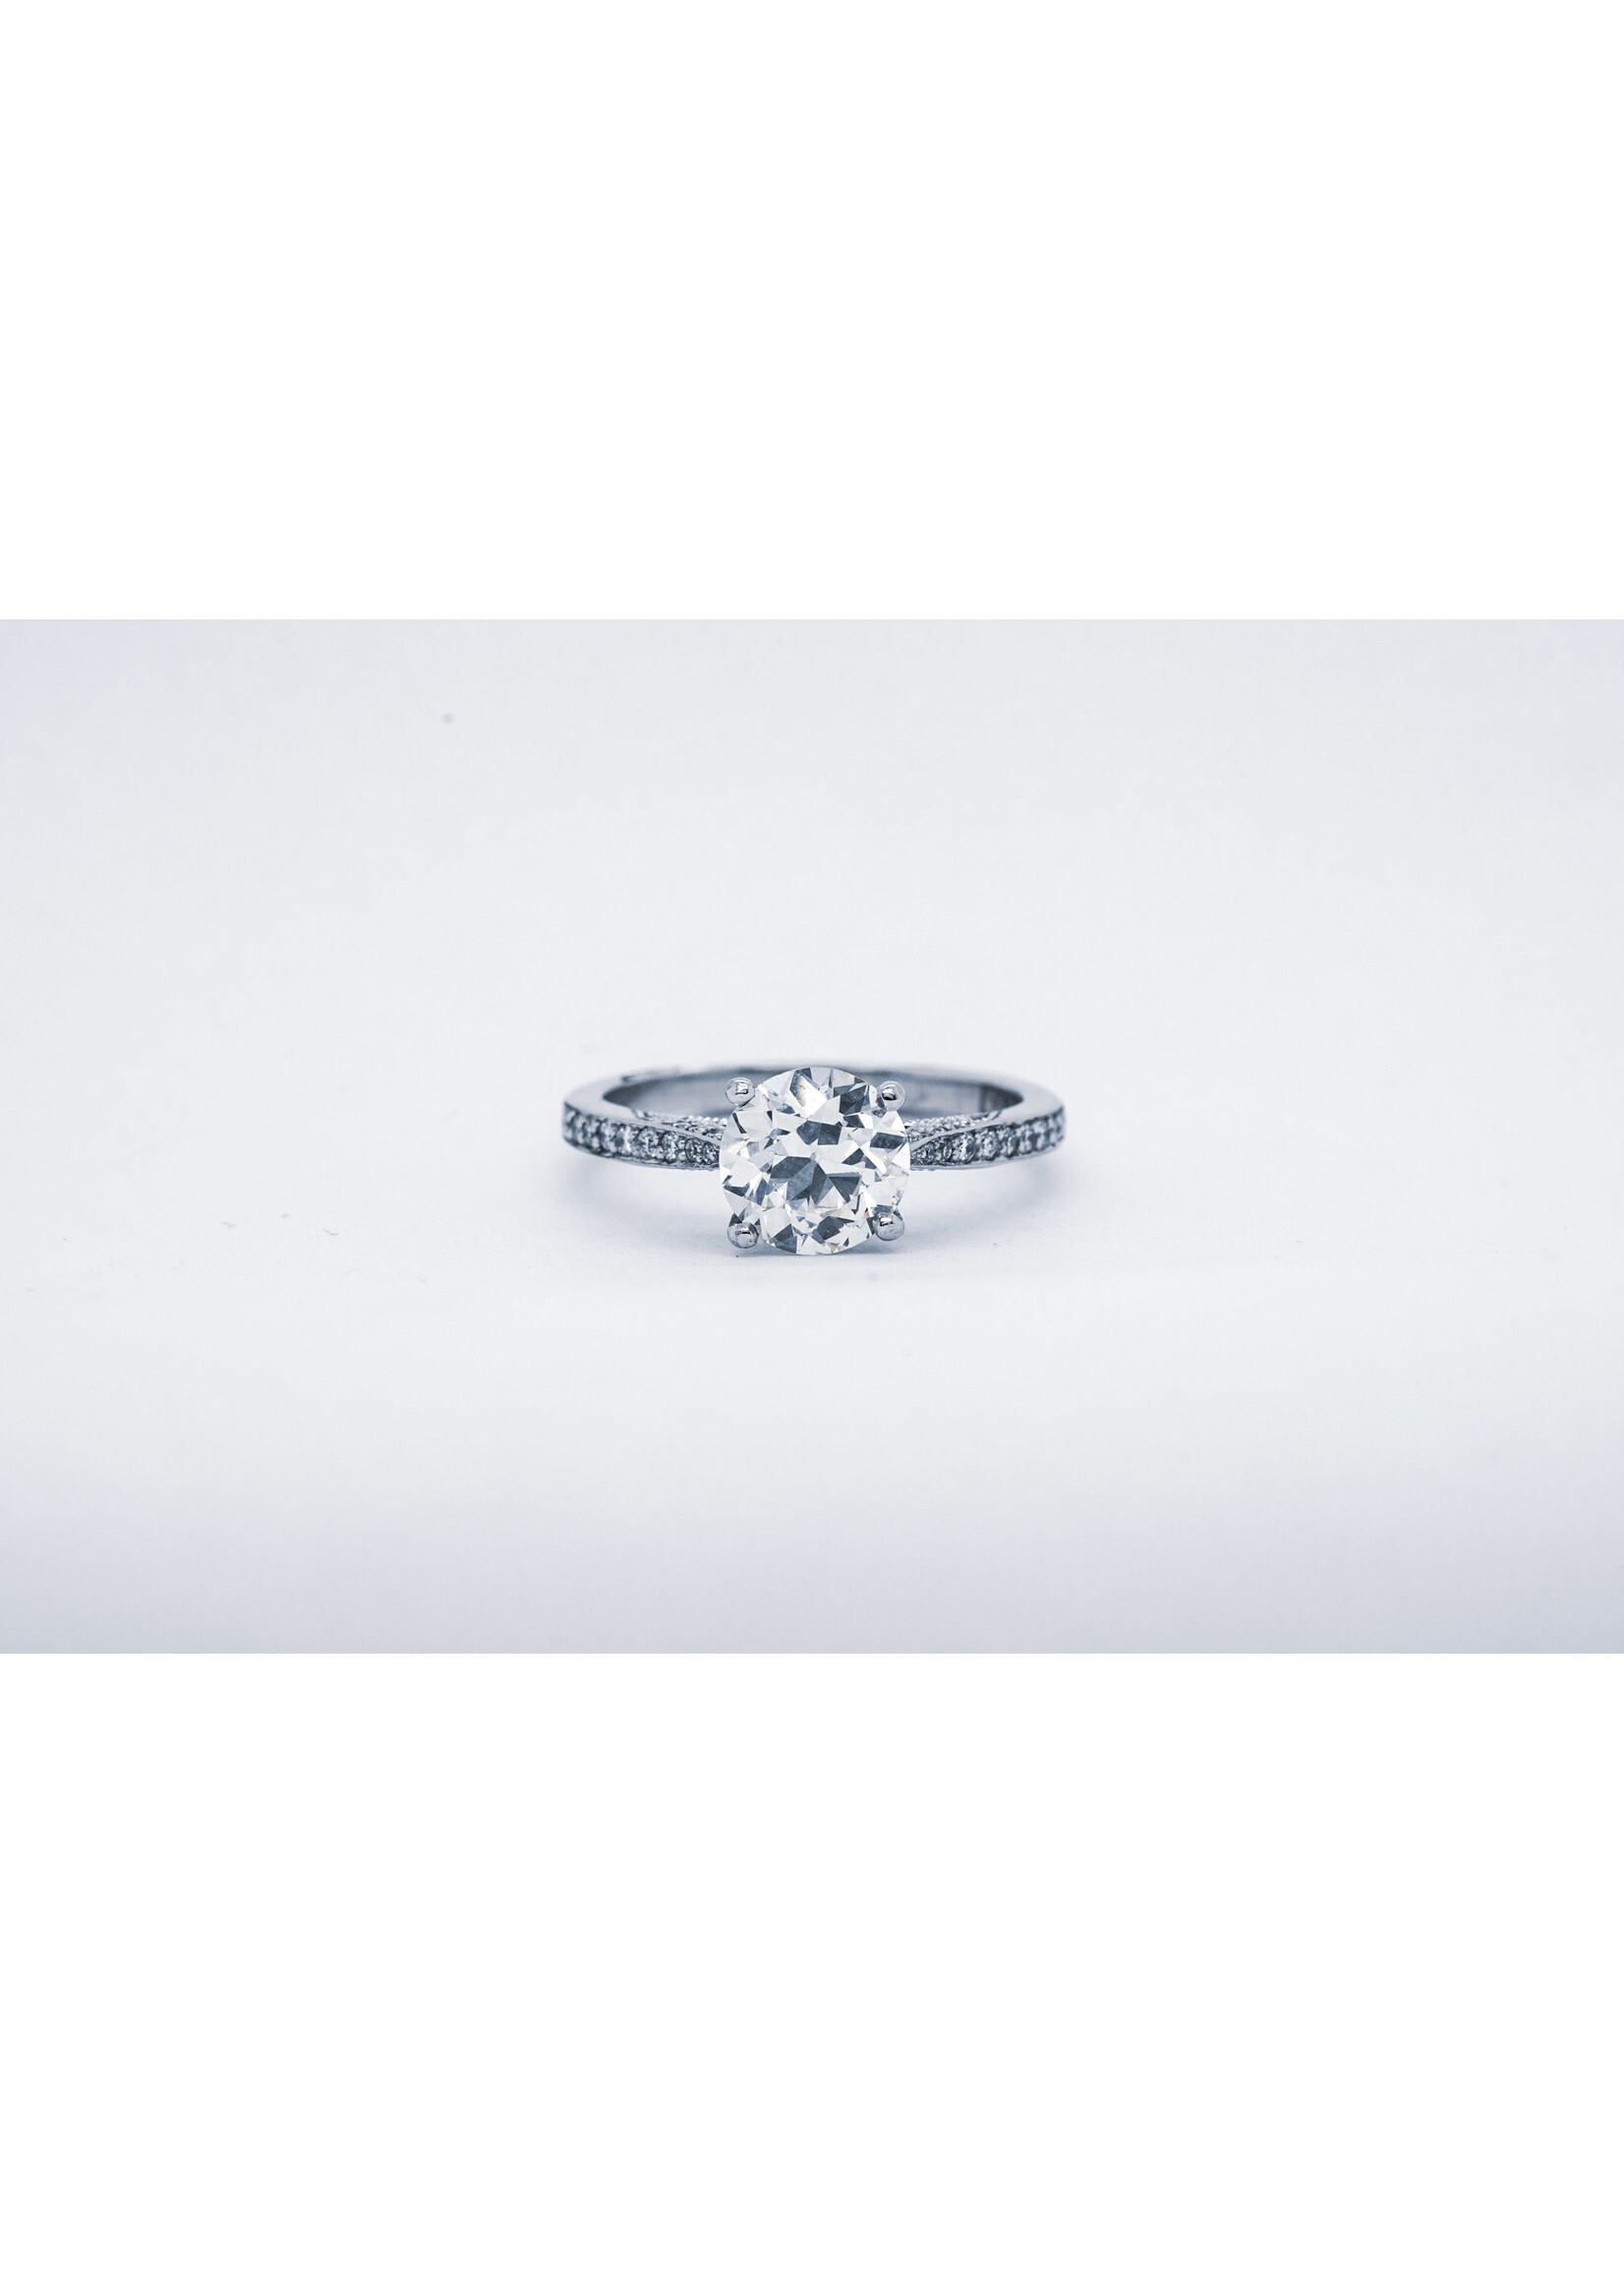 18KW 3.55g 1.78ctw (1.60ctr) I/VS2 Old European Tacori Diamond Engagement Ring (size 6.5)